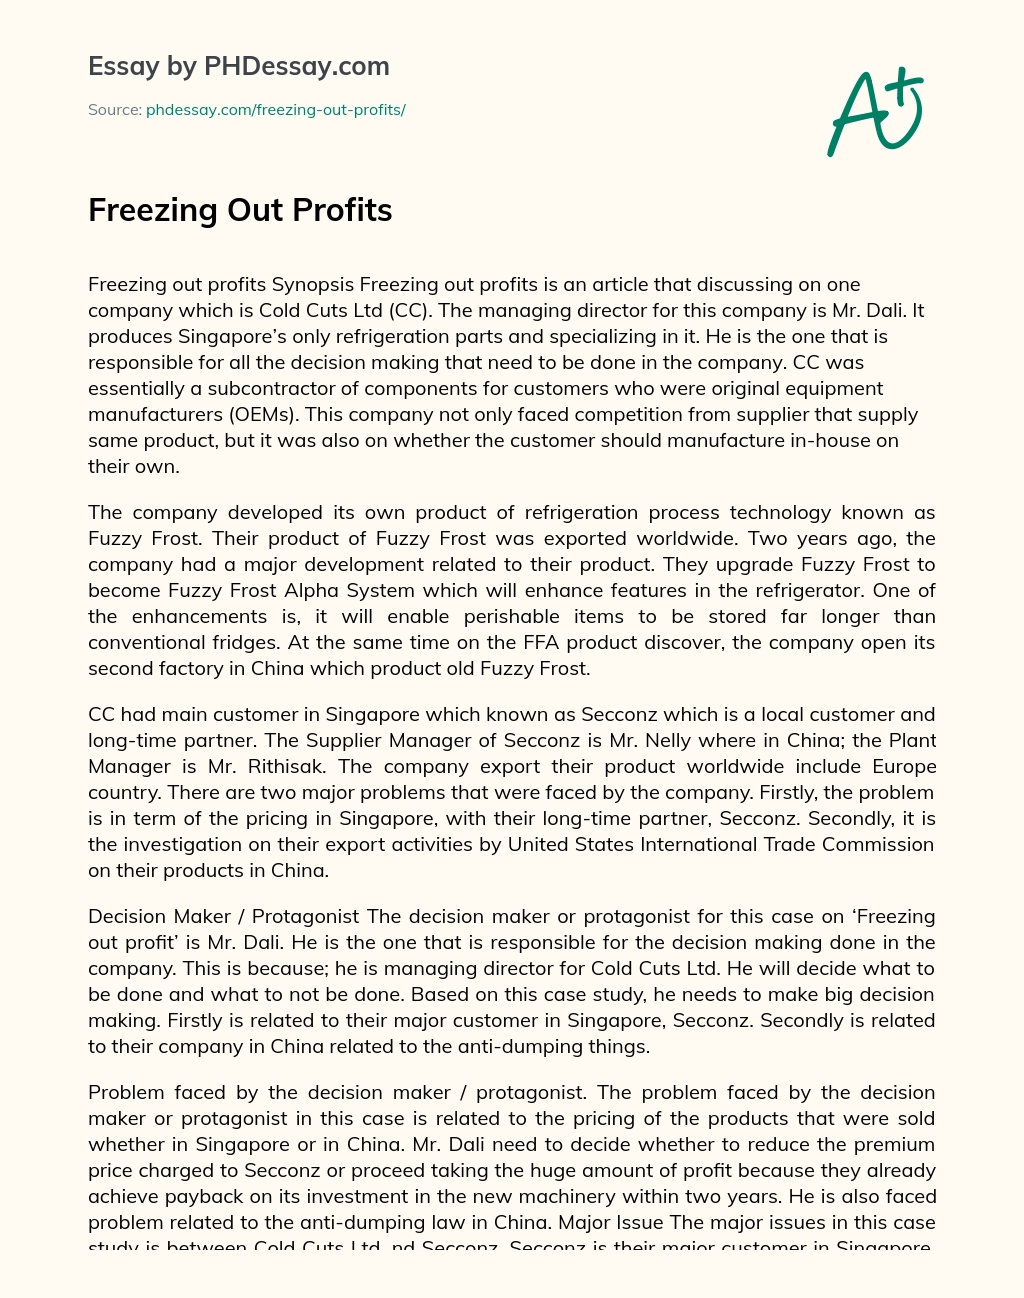 Freezing Out Profits essay